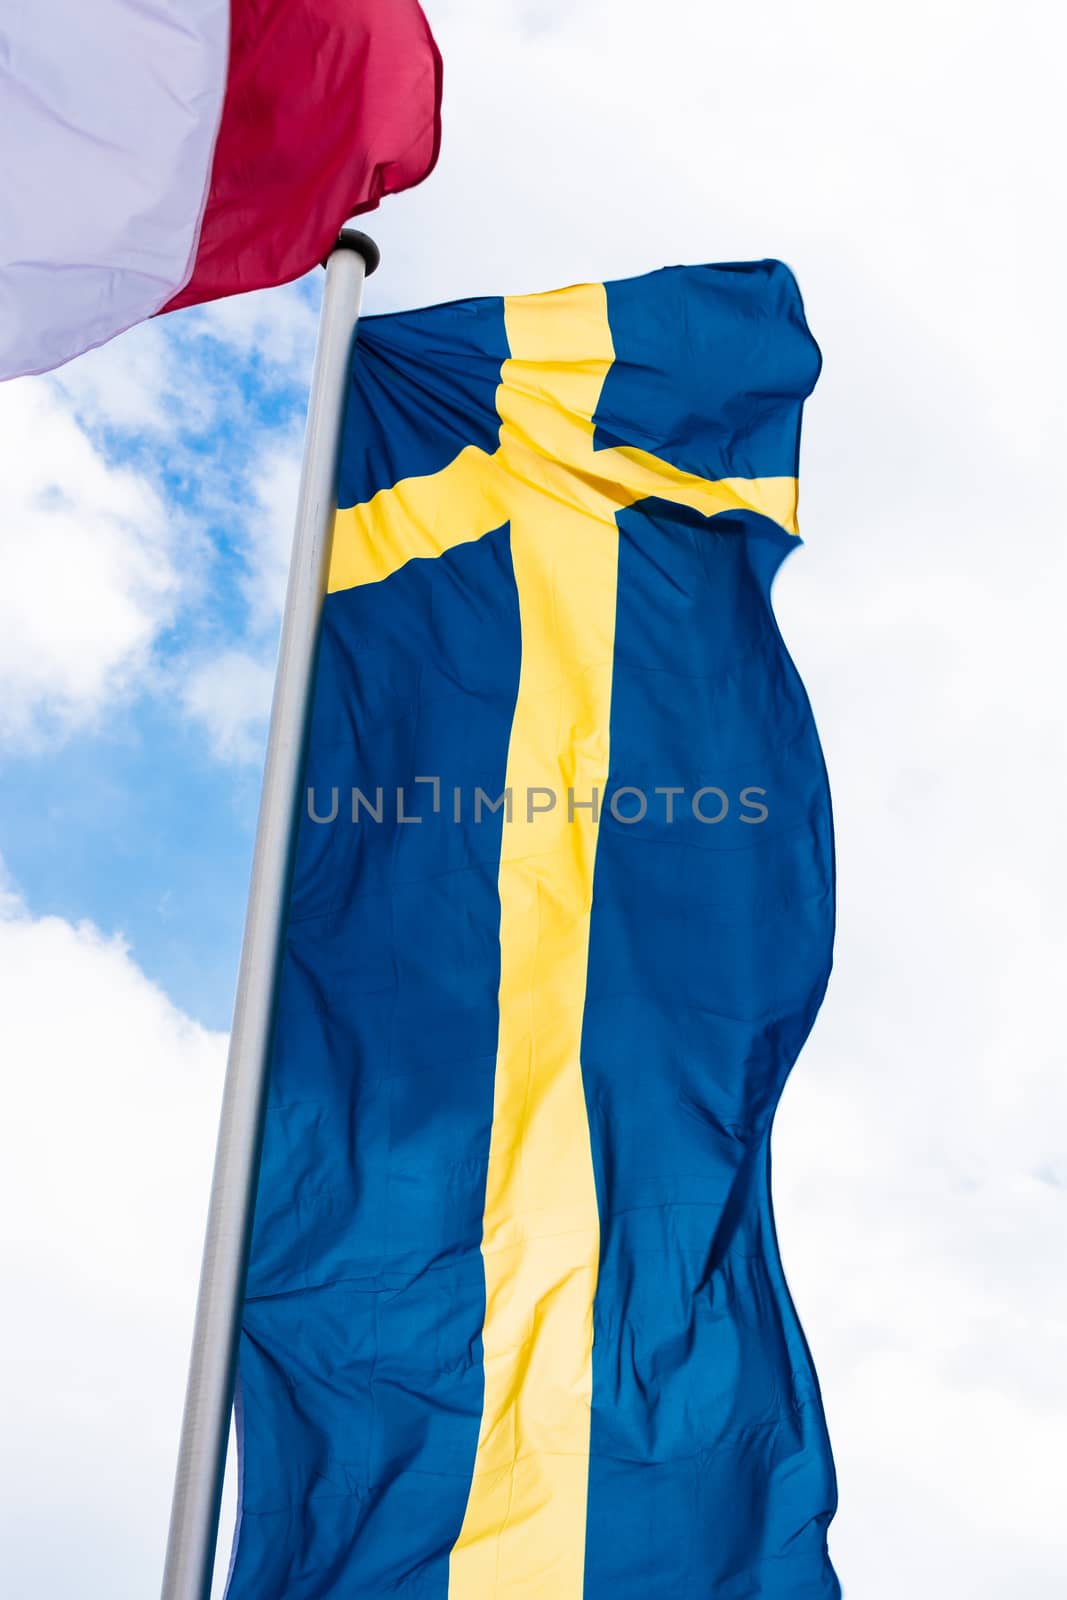 Swedish country flag arranged against a blue sky.